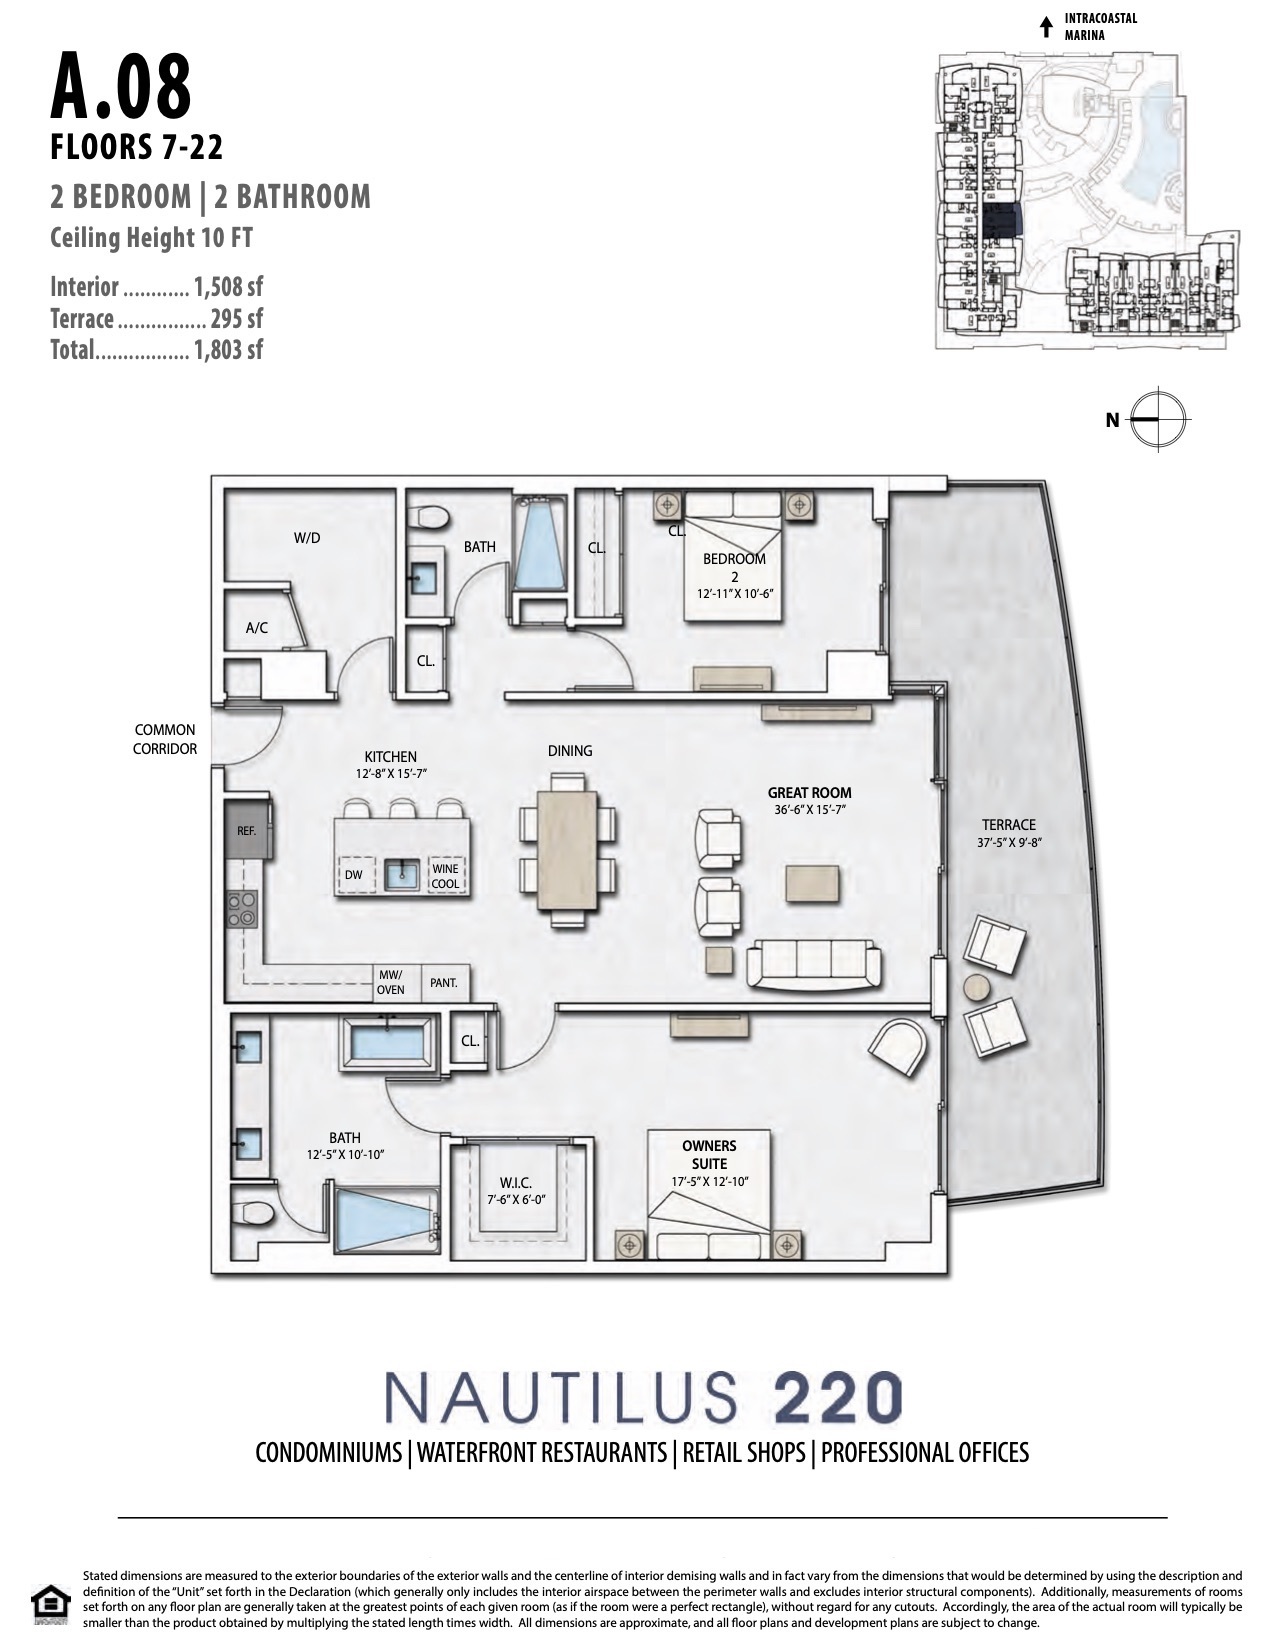 Floor Plan for Nautilus 220 Floorplans, A.08